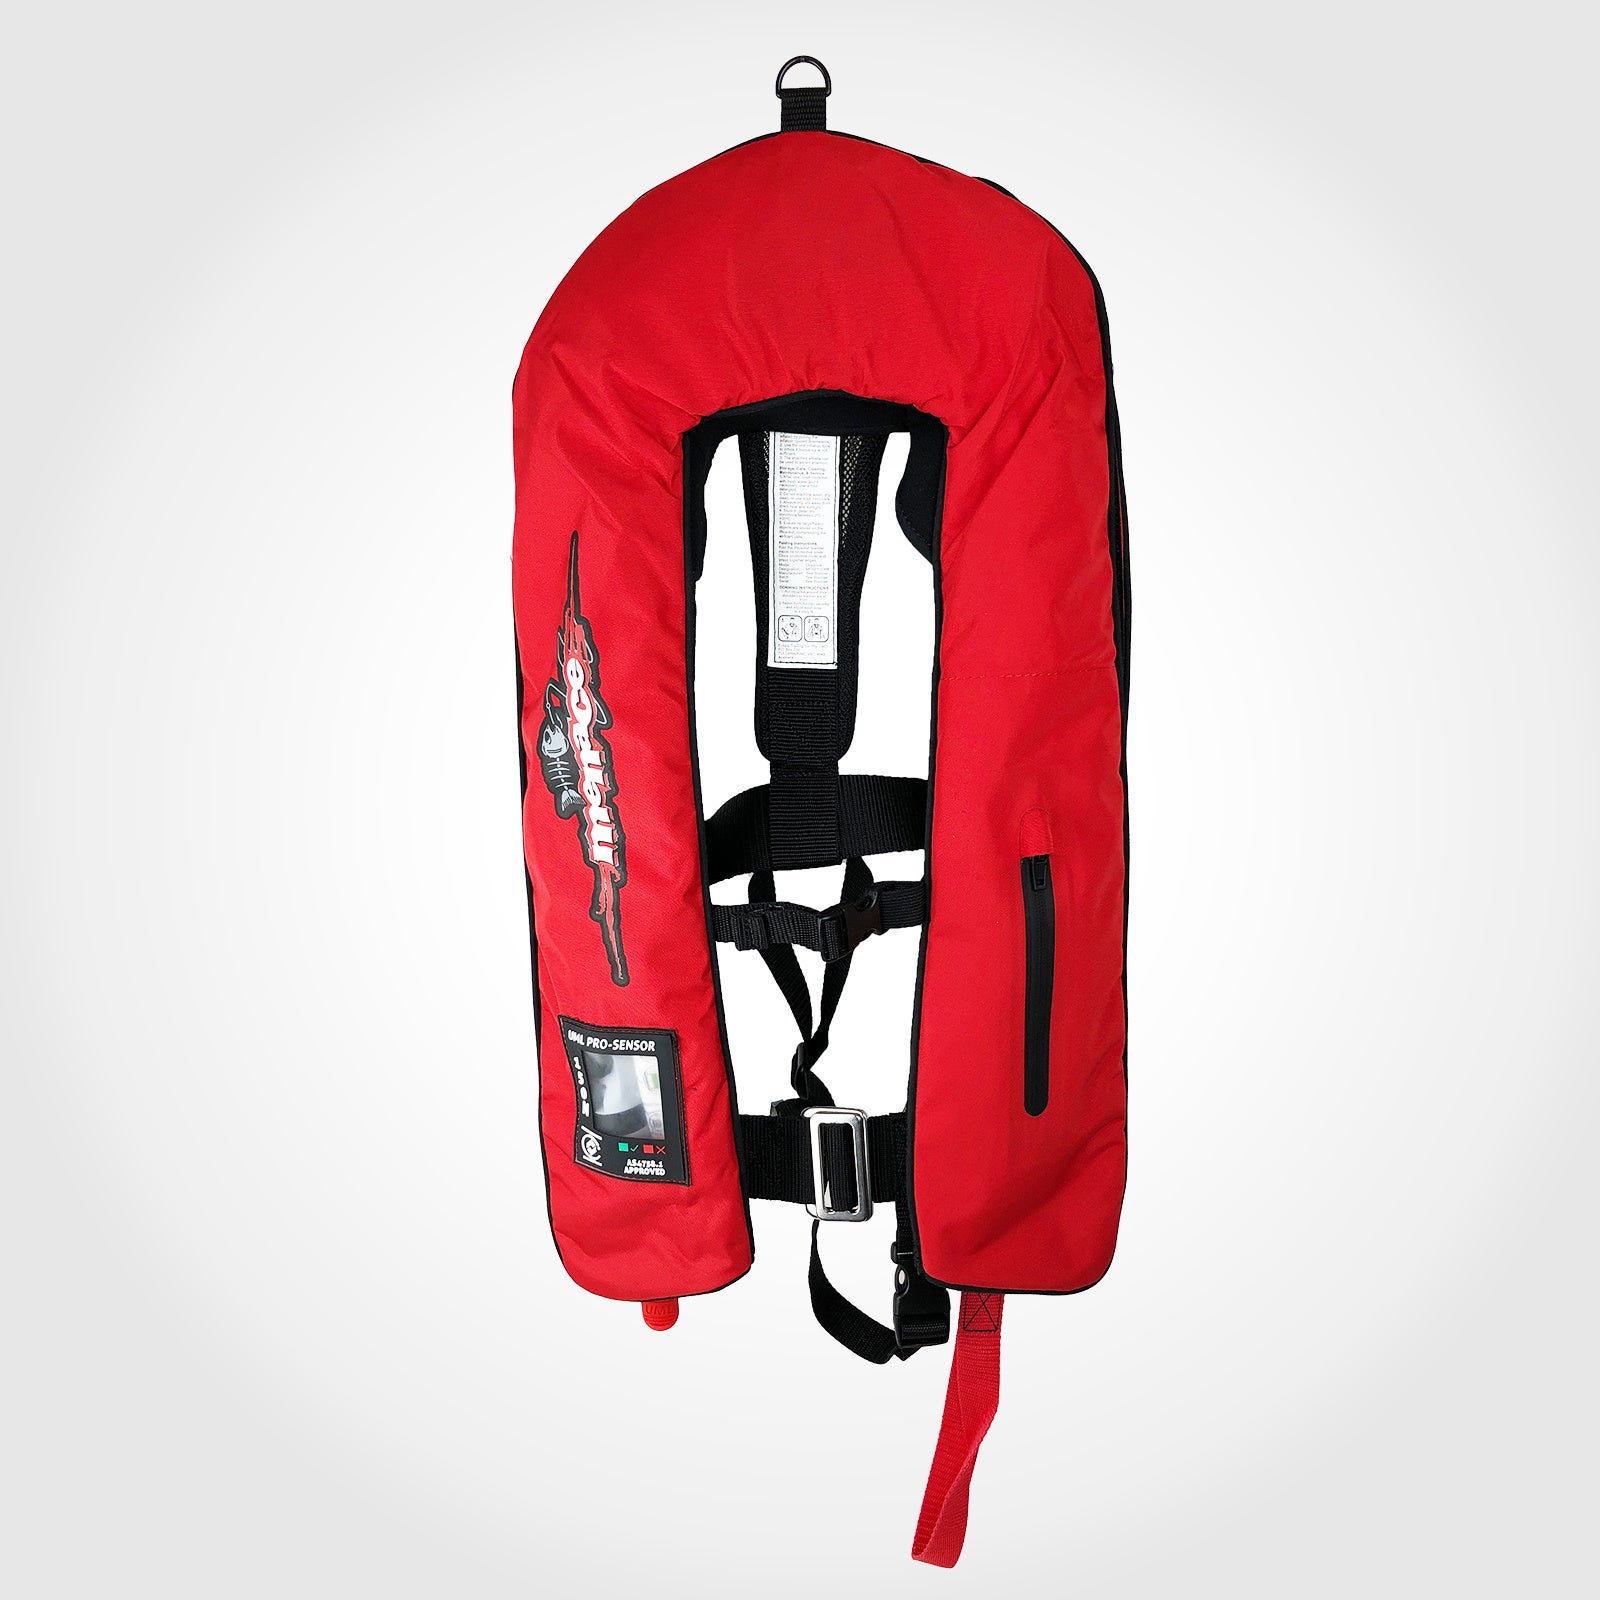 ADULT Inflatable Life Jacket PFD Type 1 Yoke Manual LifeJackets Level 150N Red